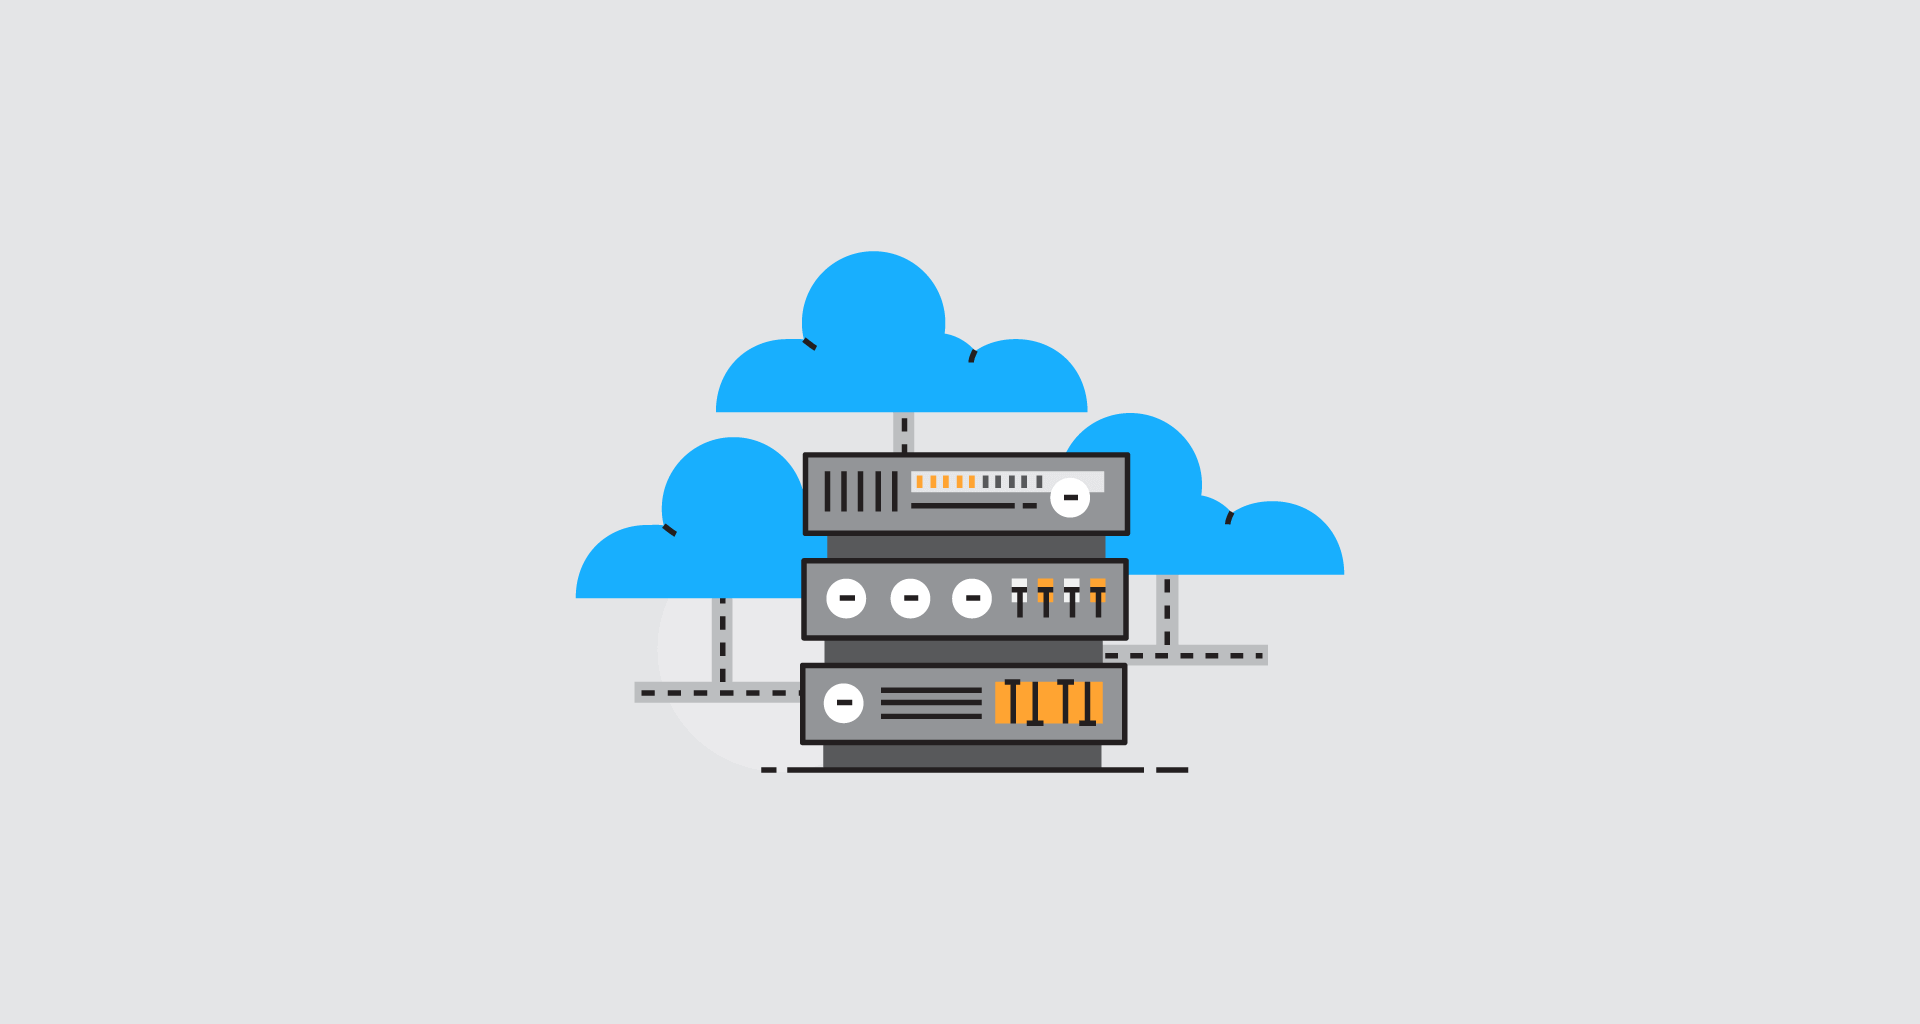 cloud server görseli, bulut sunucu temsili görsel